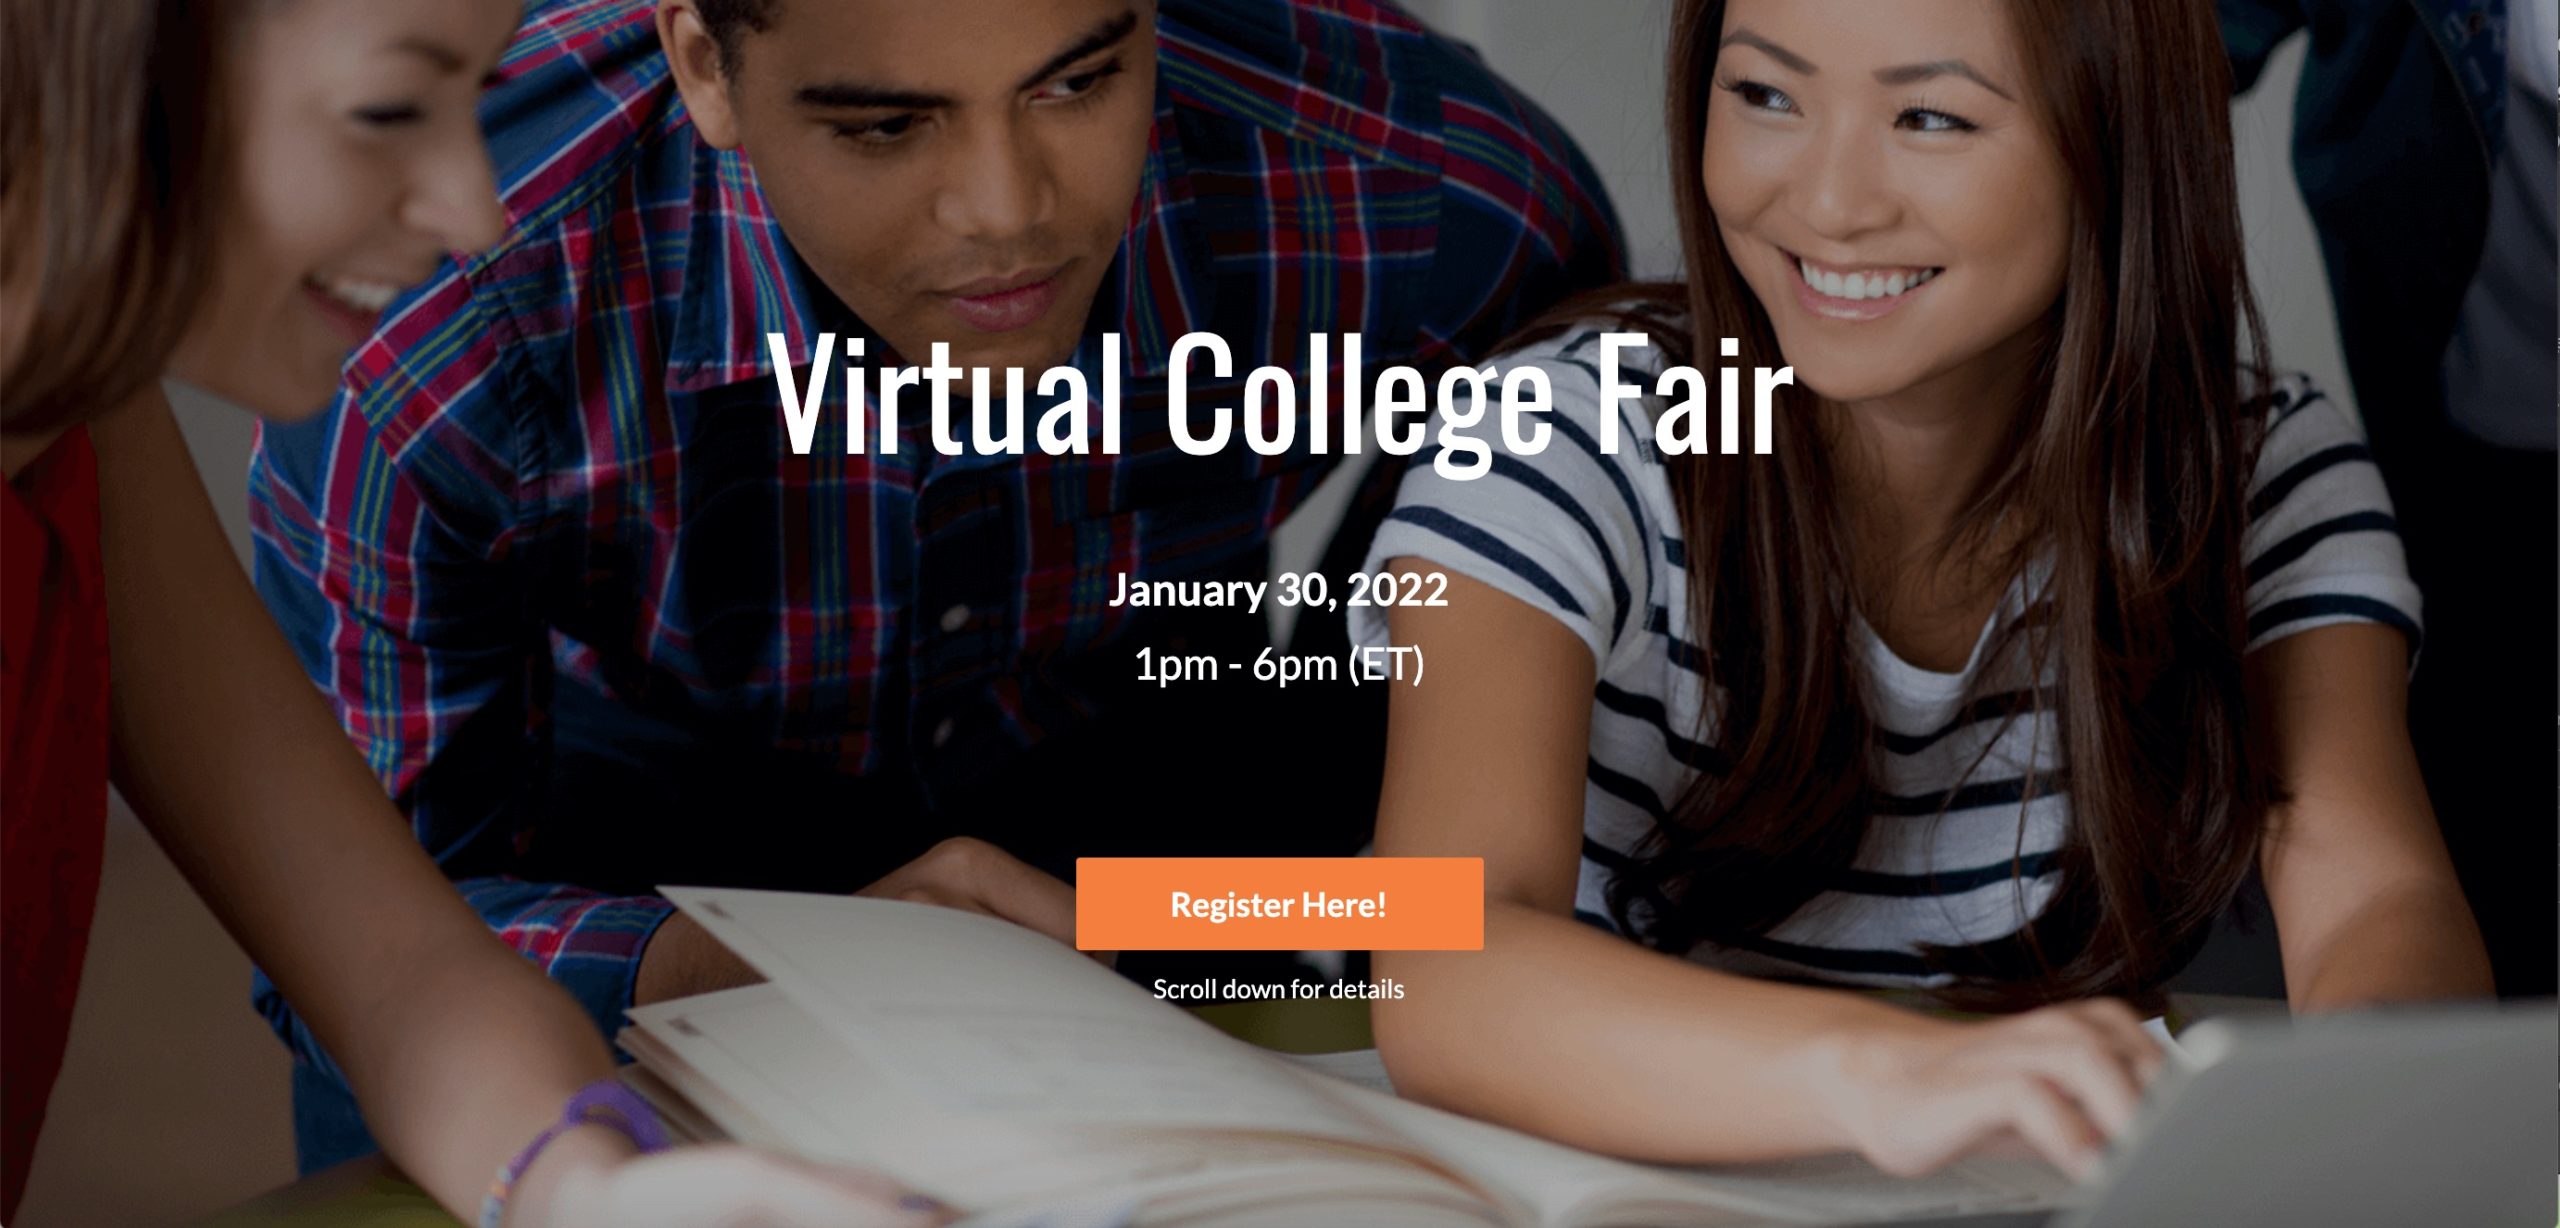 Upcoming Virtual College Fair